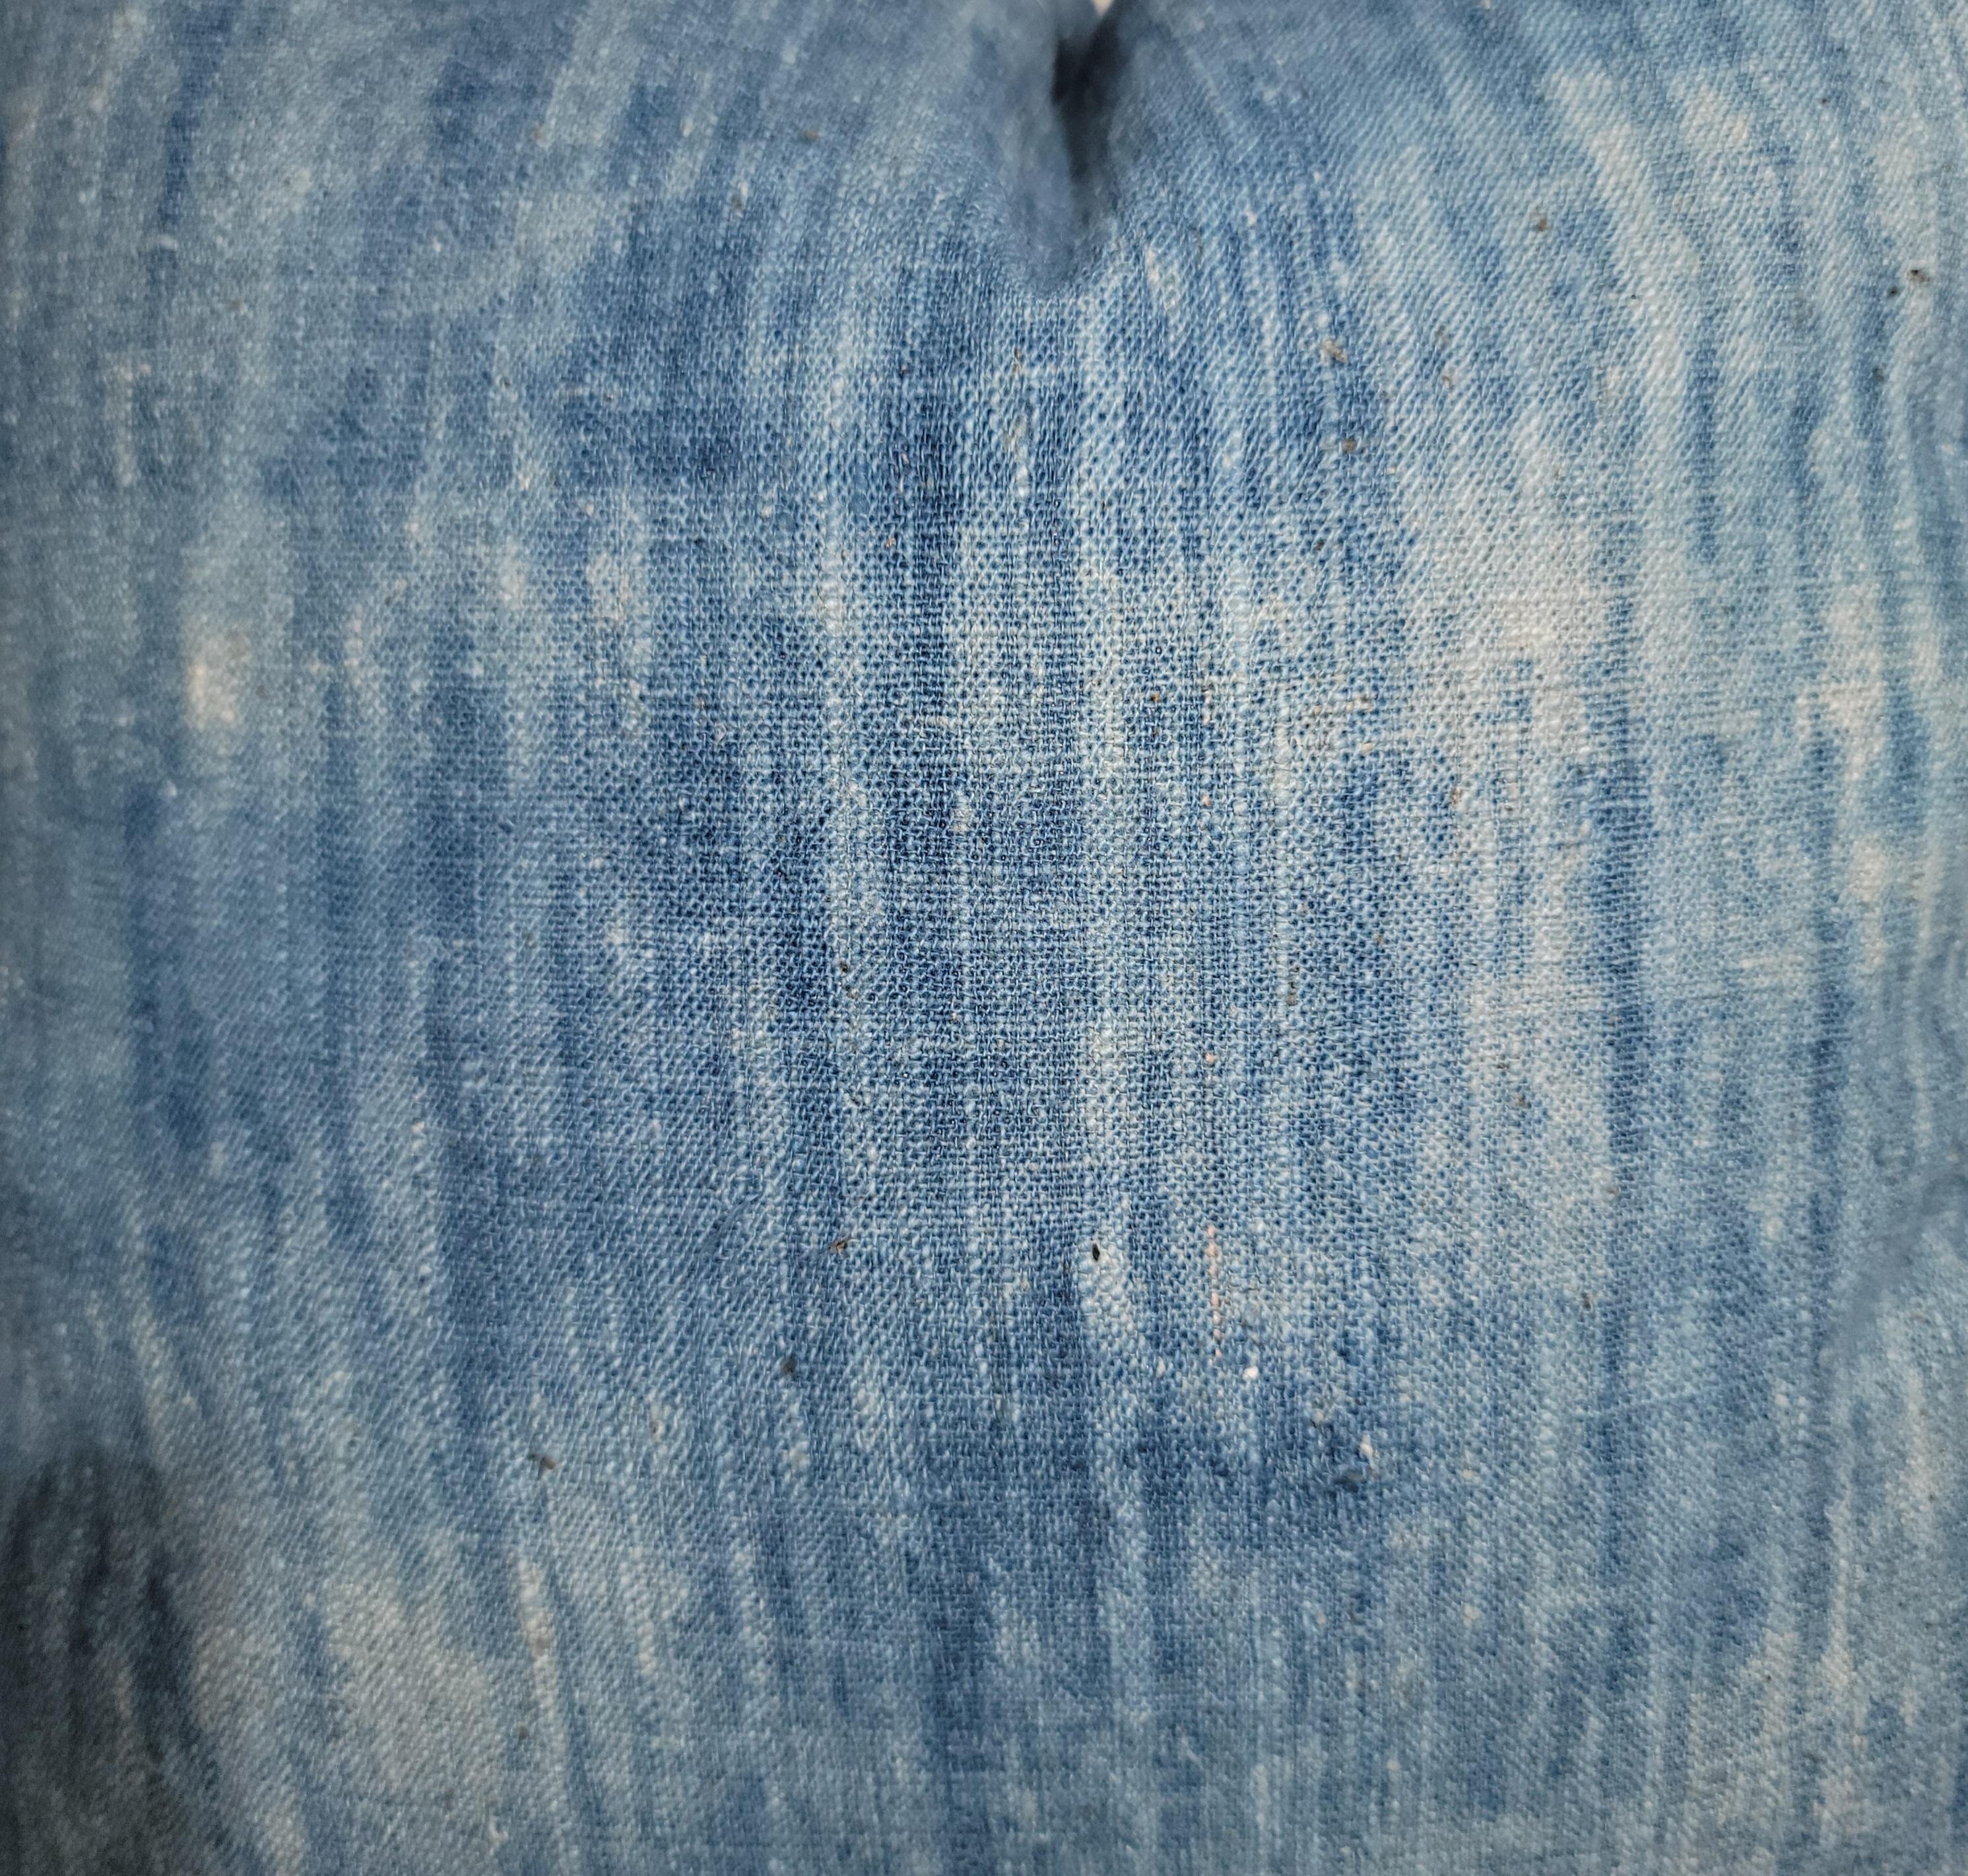 19Thc Cotton homespun  linen fabric pillows.Blue on the front & white linen backing.